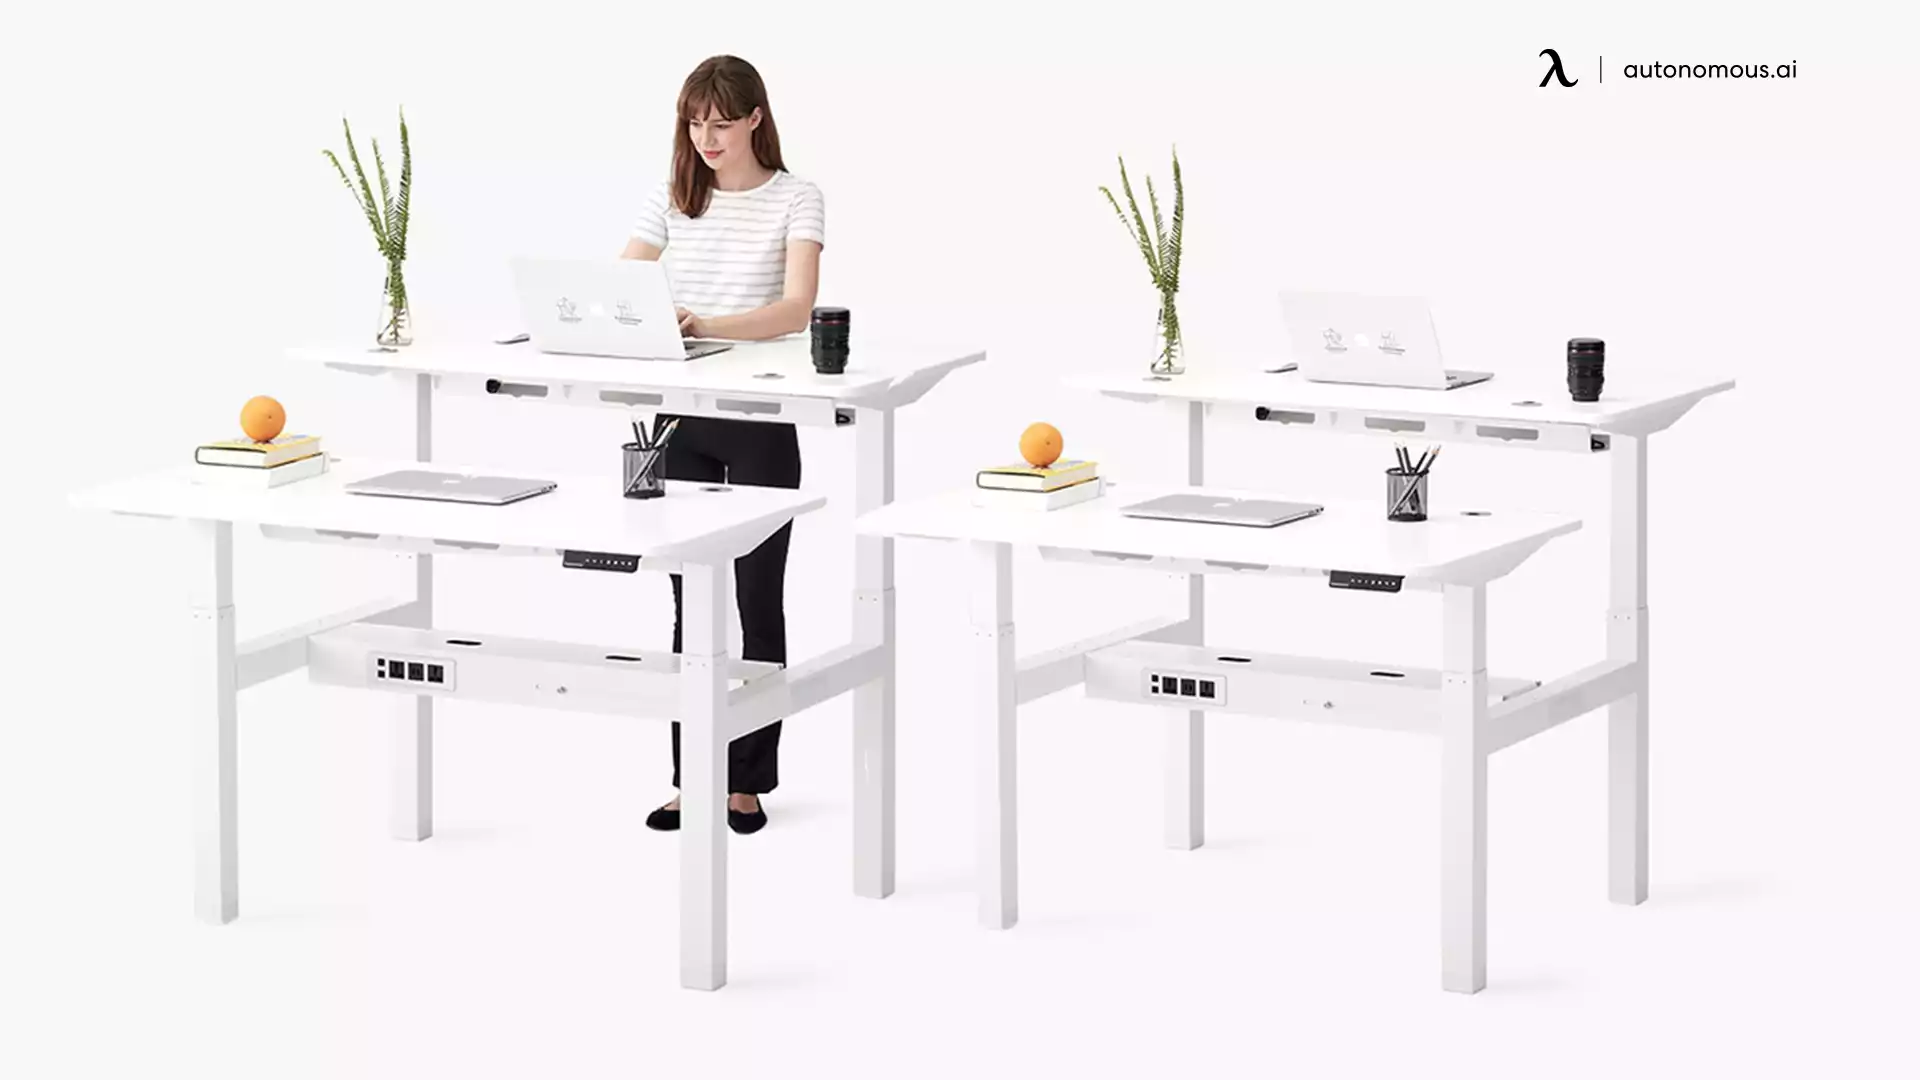 Four-leg sit-stand desk